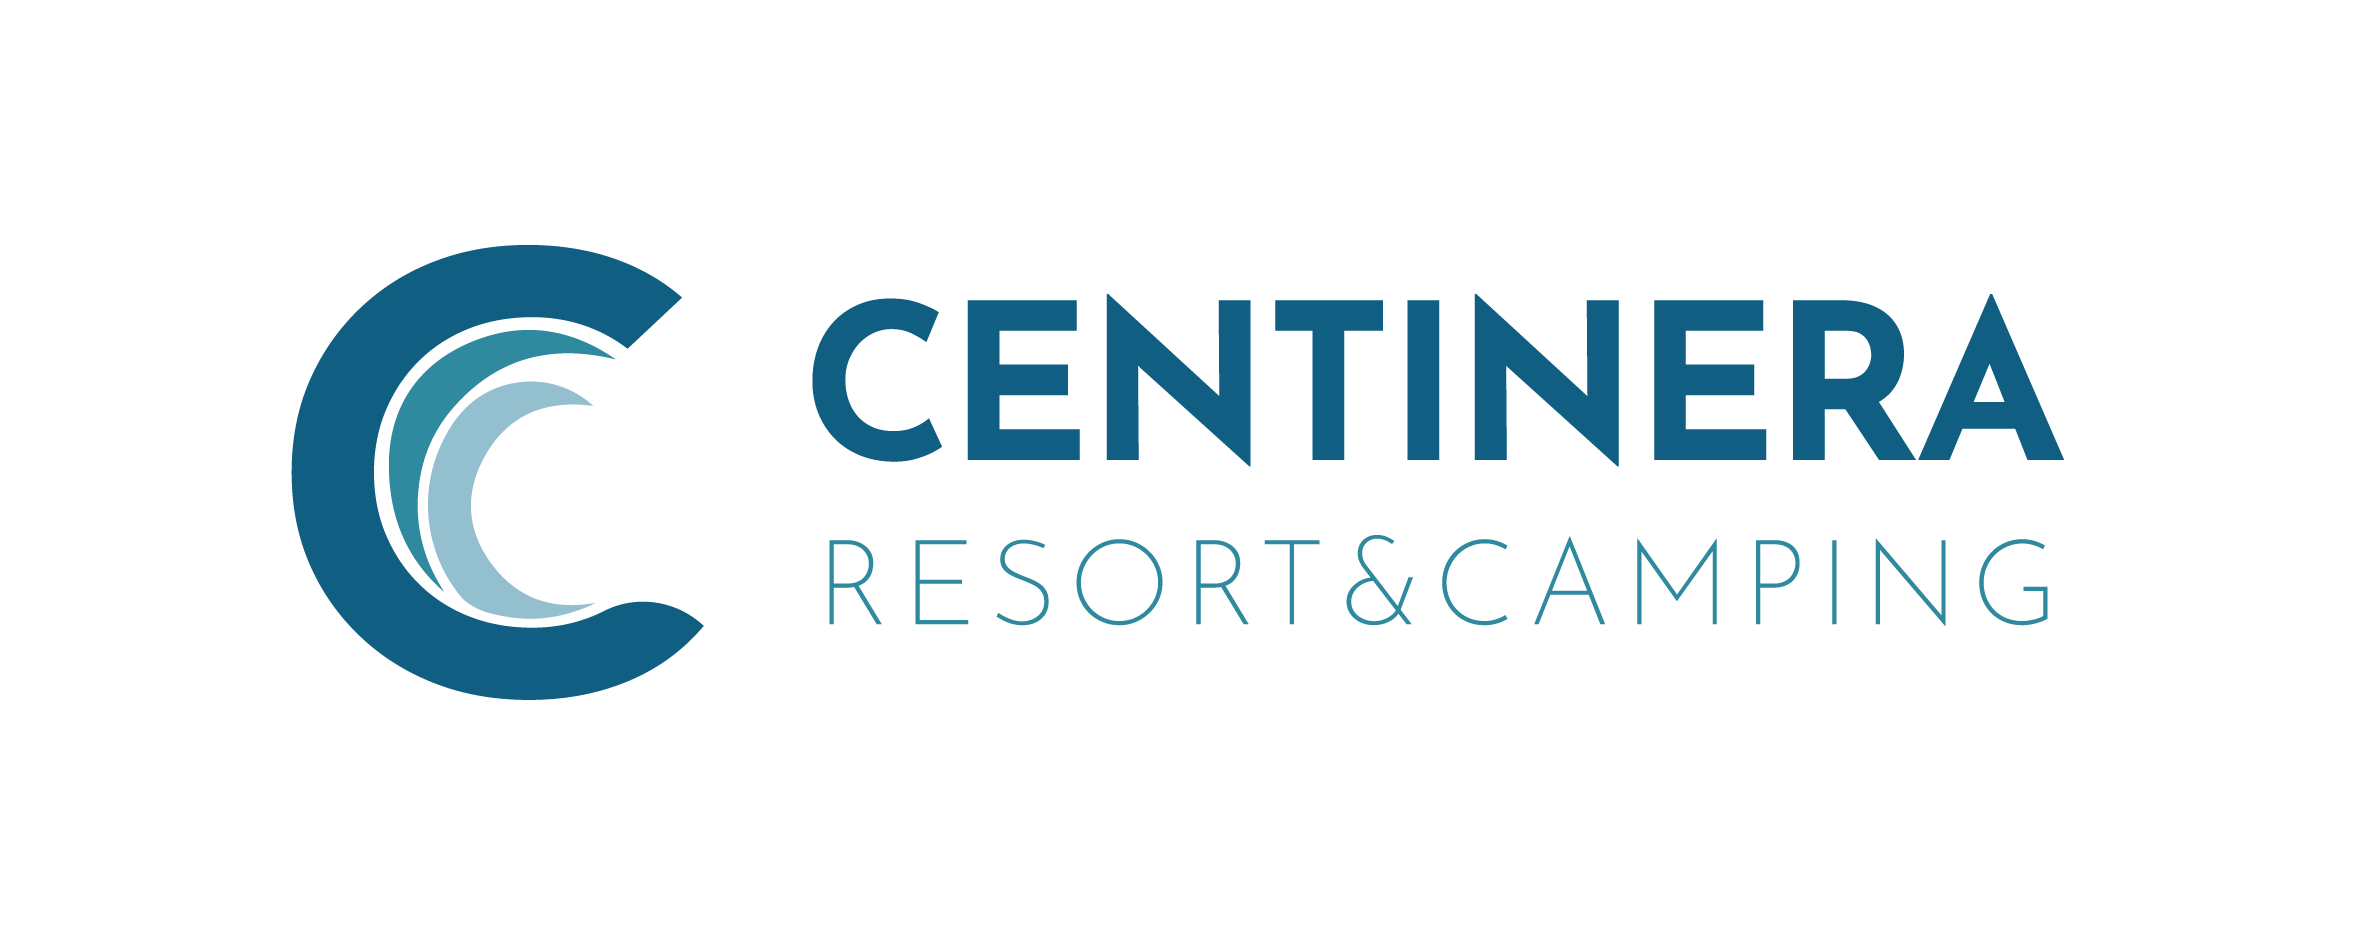 Centinera Resort & Camping